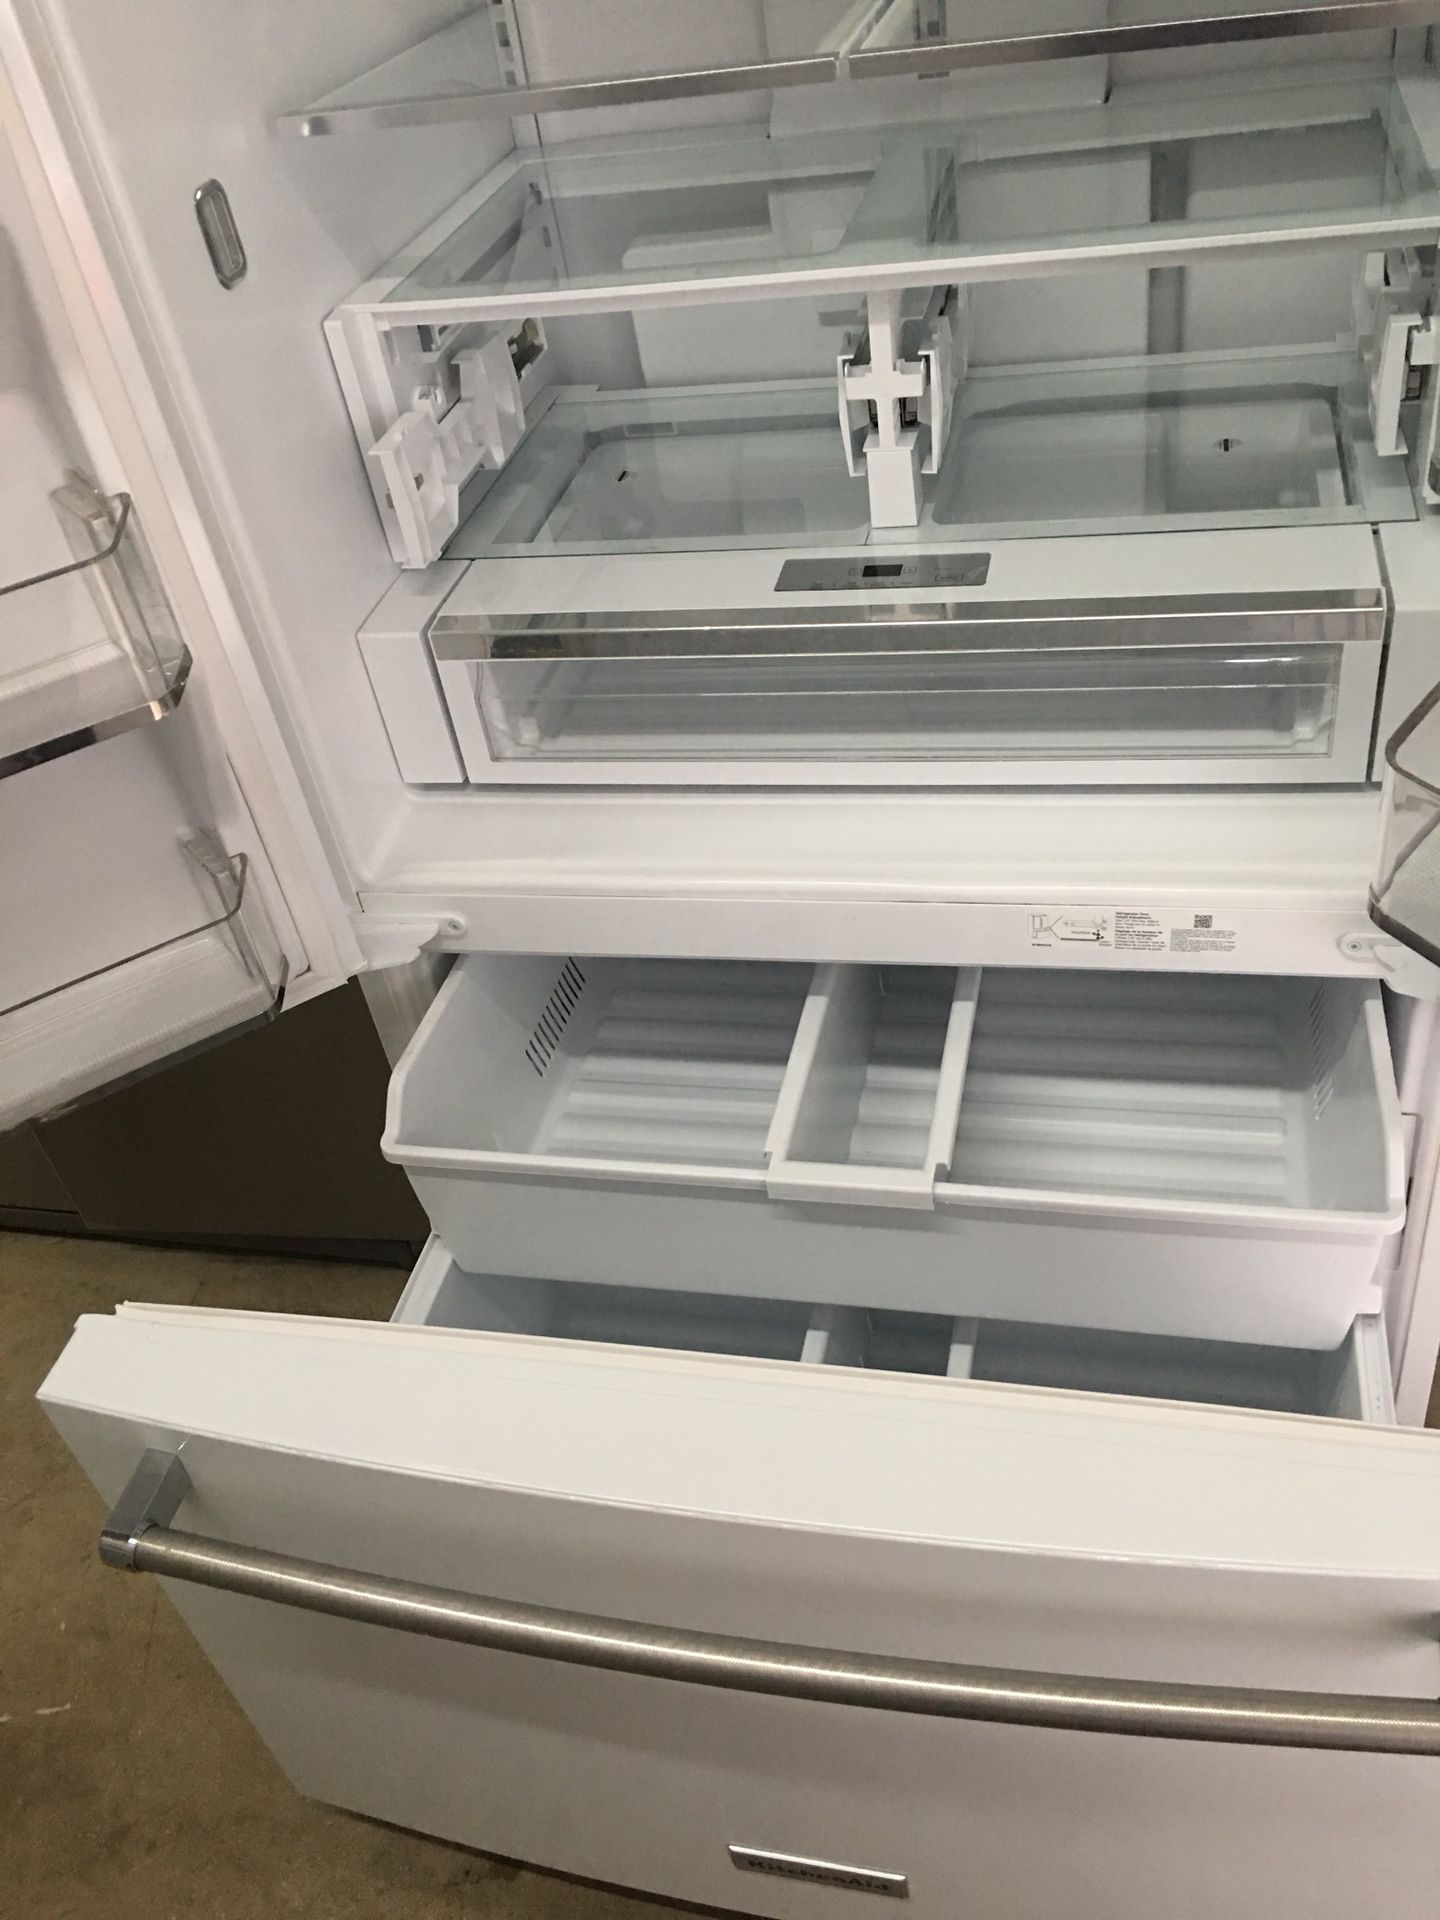 White bottom freezer